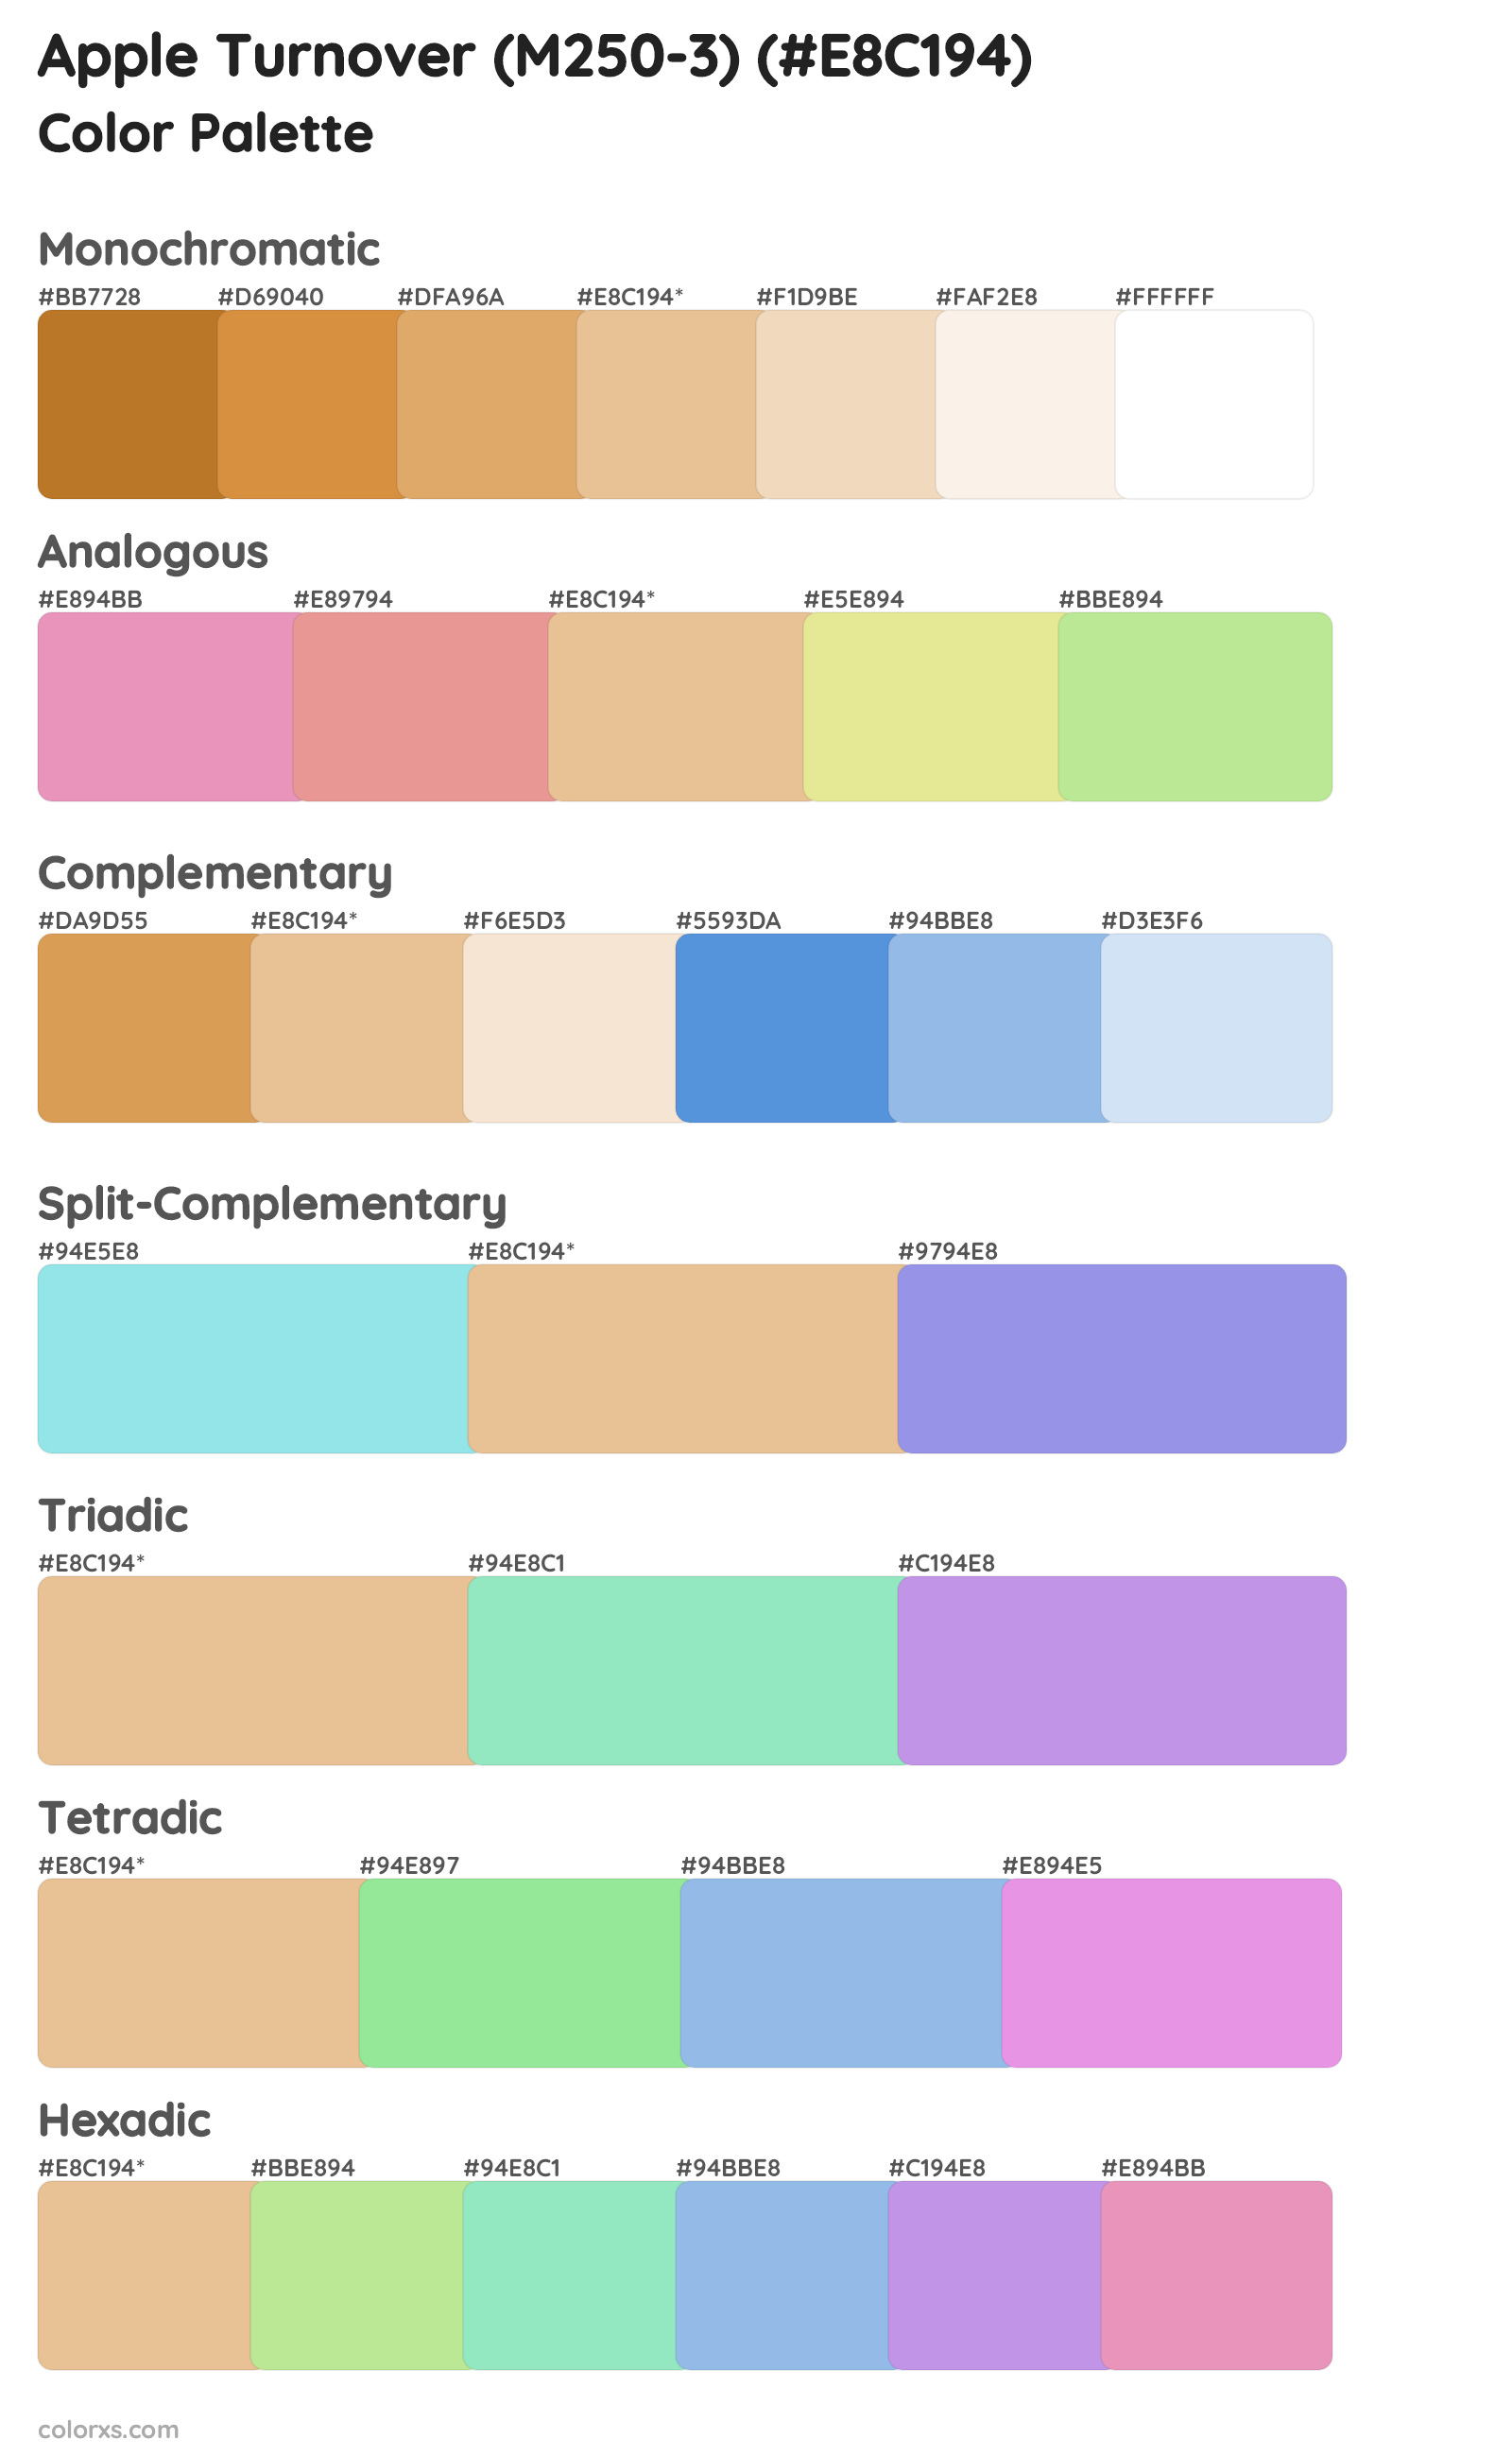 Apple Turnover (M250-3) Color Scheme Palettes